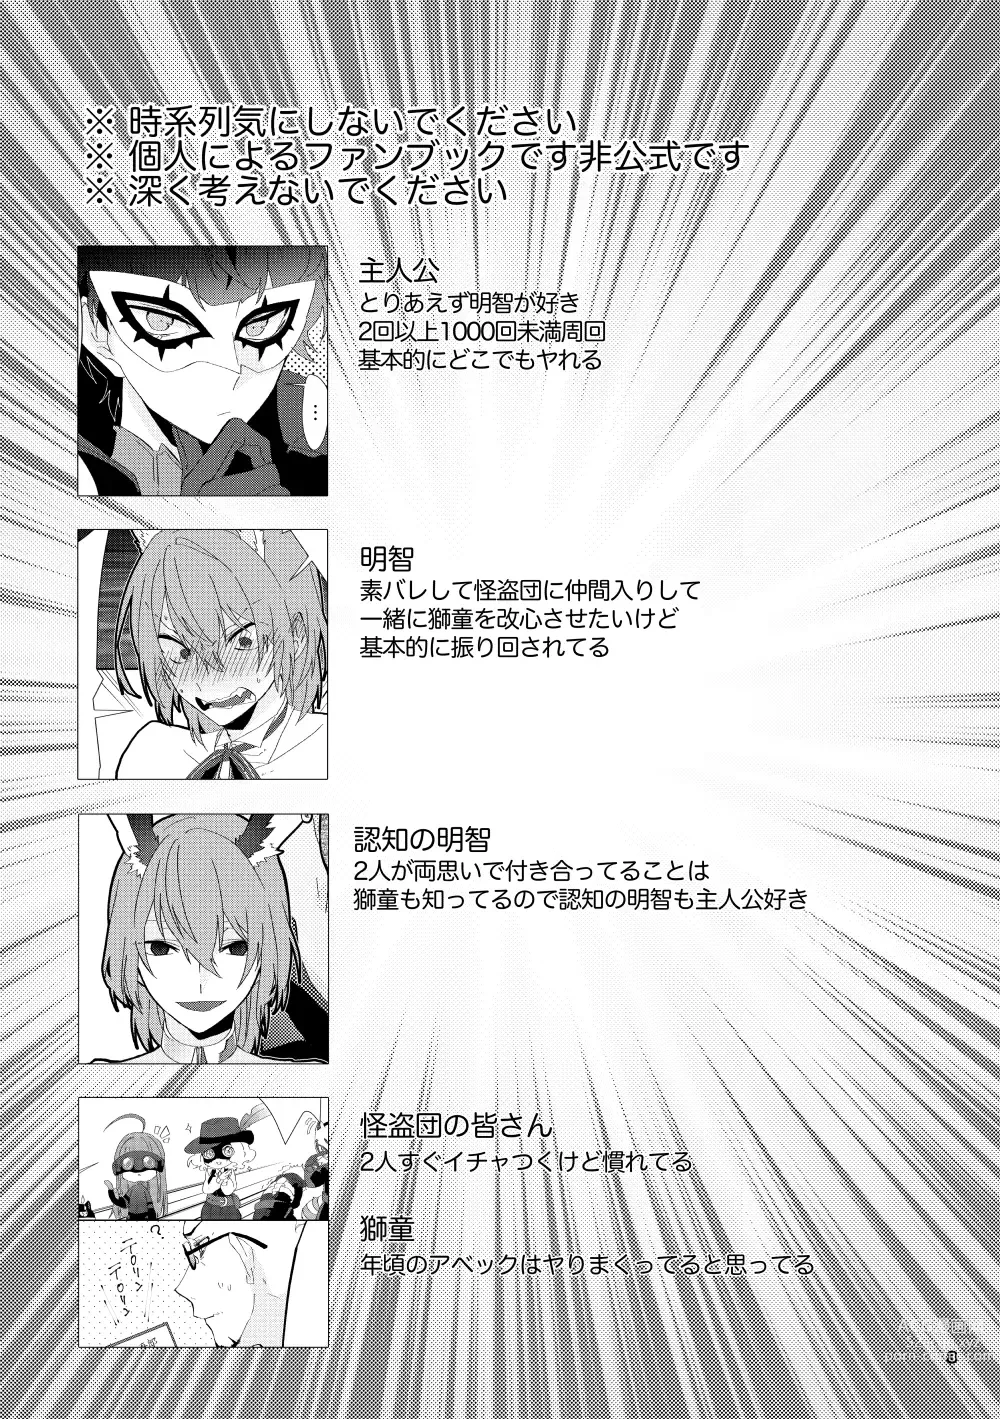 Page 2 of doujinshi Ninchi no chikara tte suge-e!!